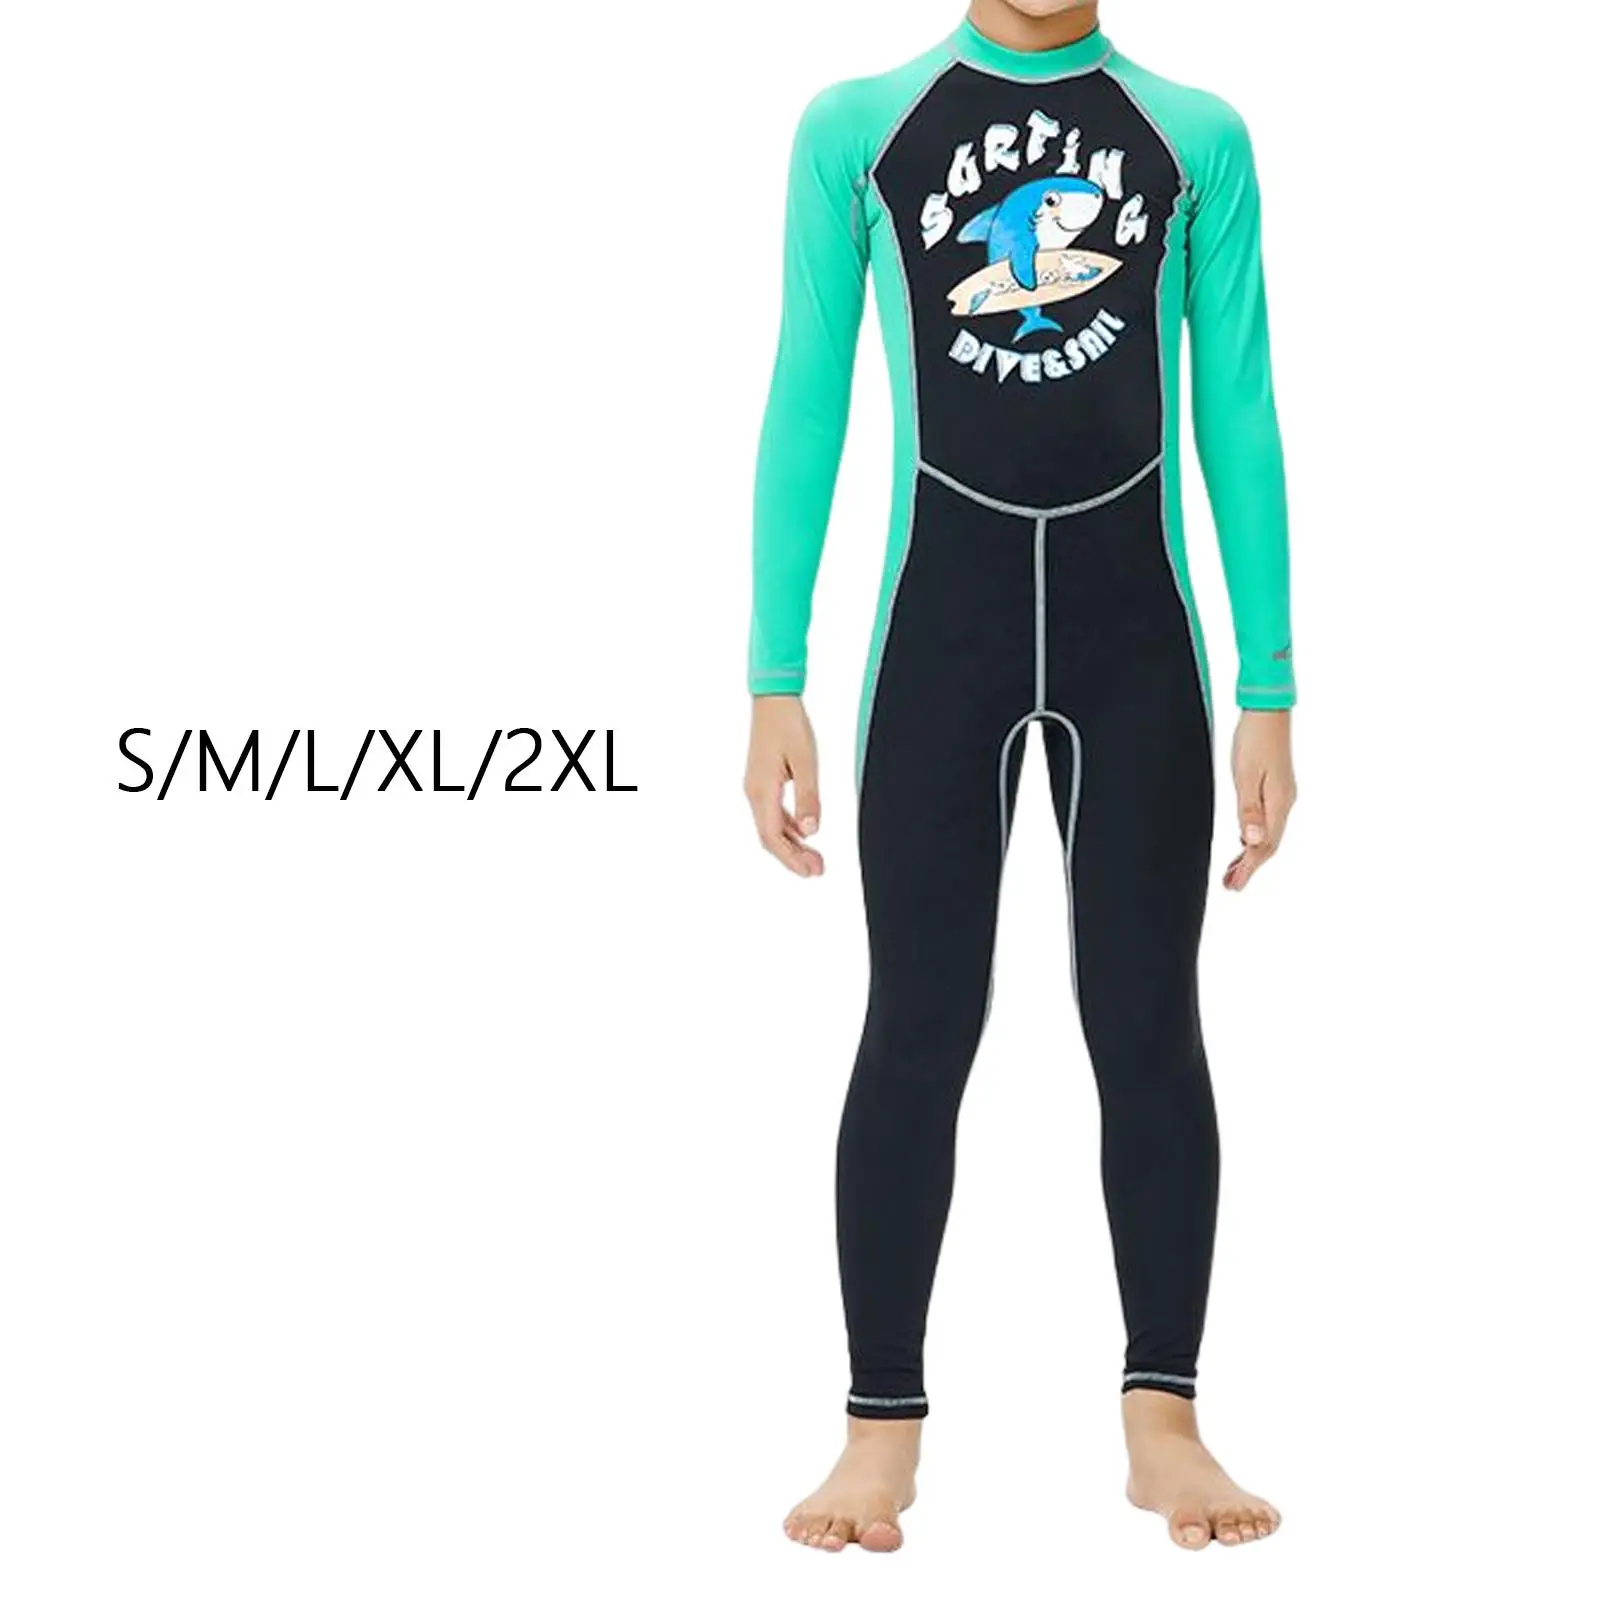 Kids Wetsuit Swimsuit Long Sleeve Full Body Scuba Diving Suit for Surfing Girls Boys